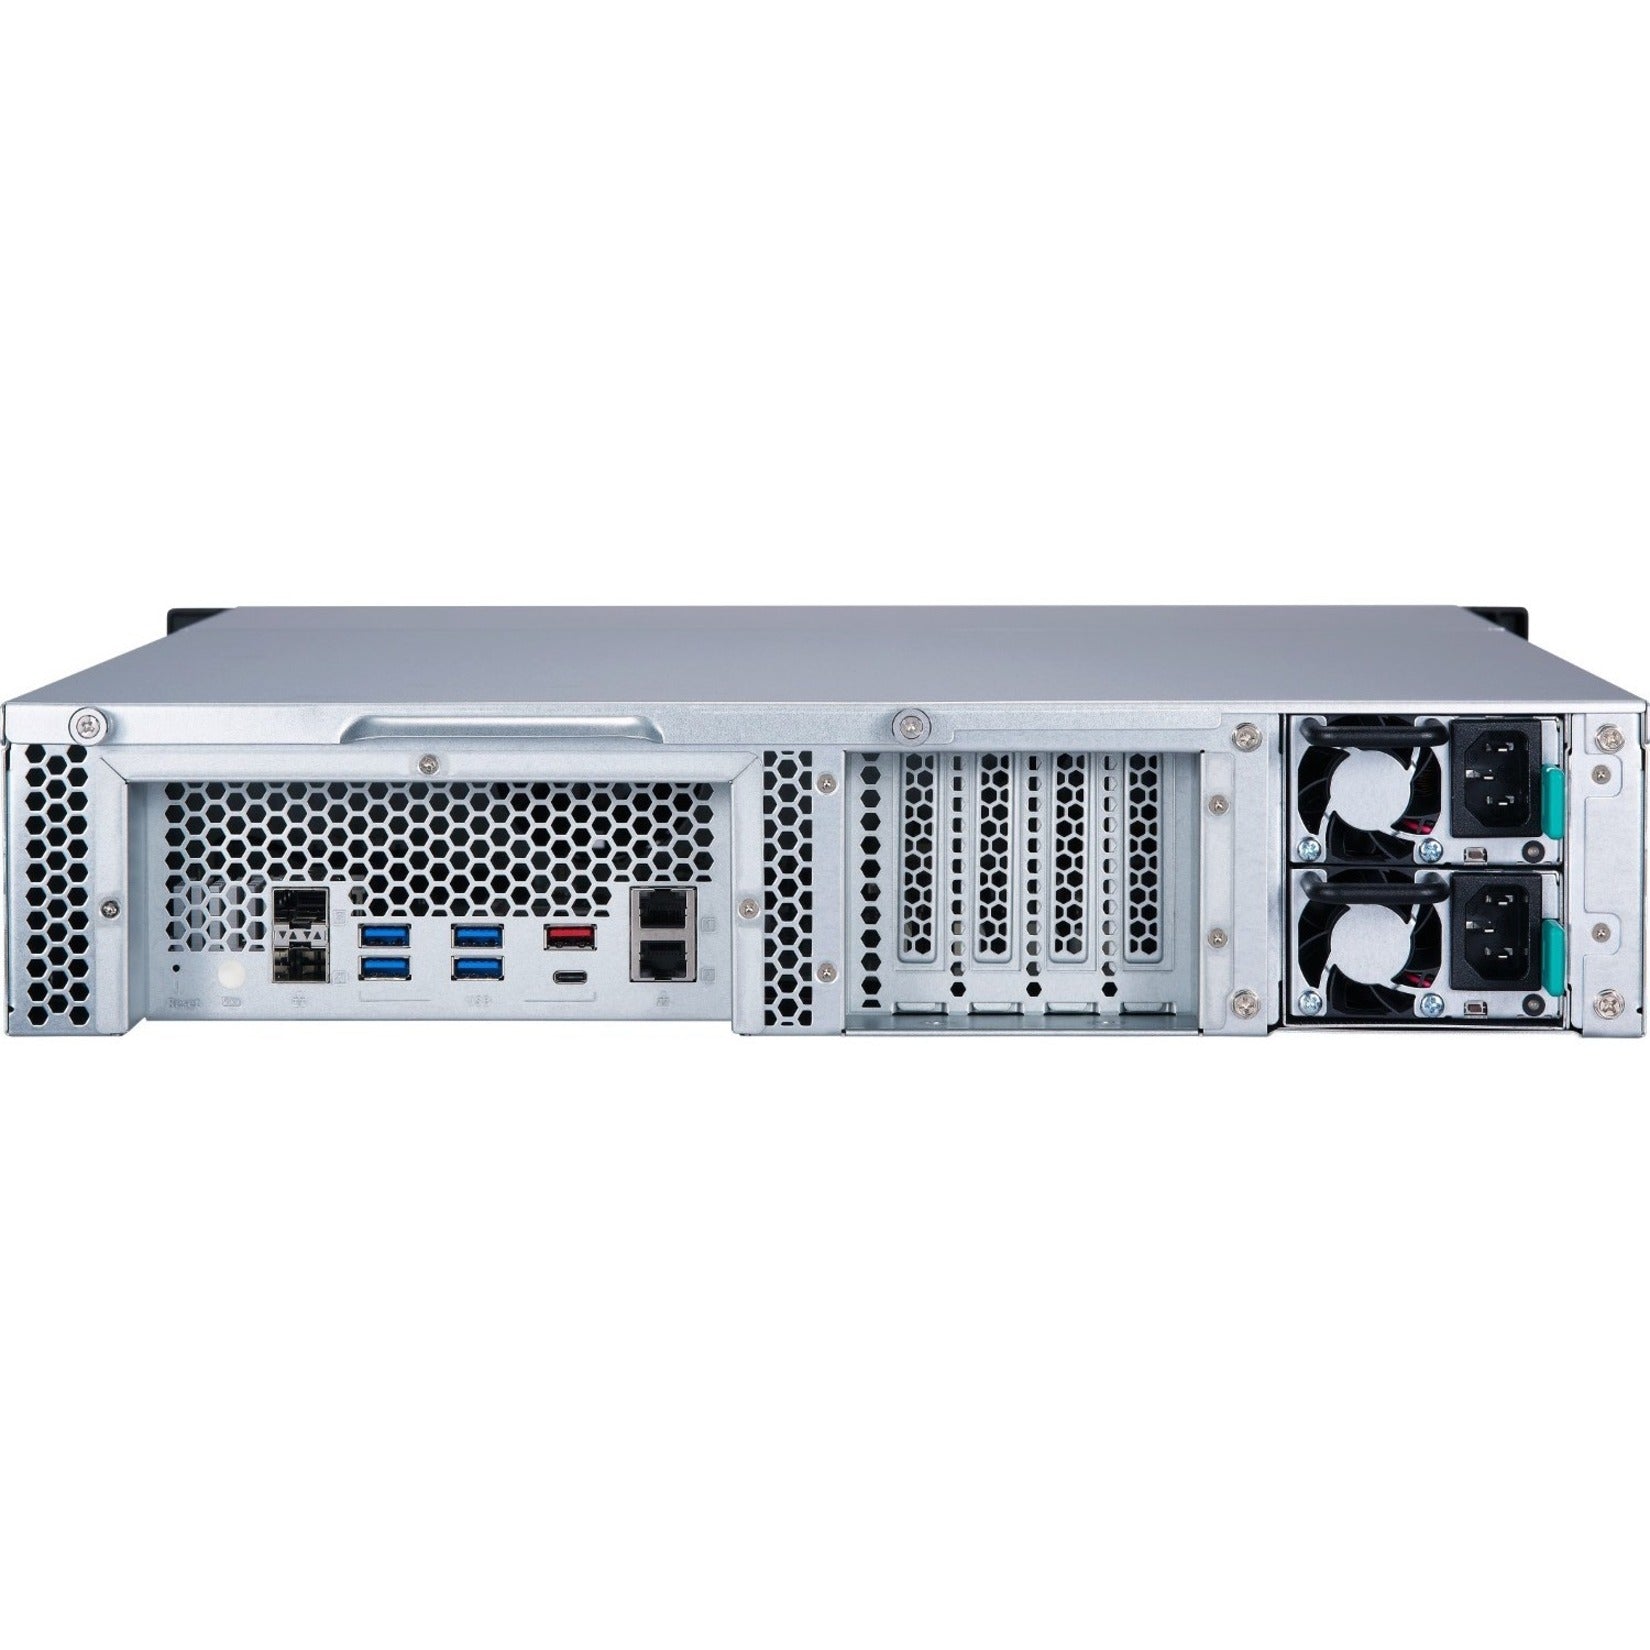 QNAP TS-877XU-RP-3600-8G SAN/NAS Storage System (TS-877XU-RP-36008GUS), Ryzen 5 3600, 8GB RAM, 8-Bay, 10GbE, 2U Rackmount